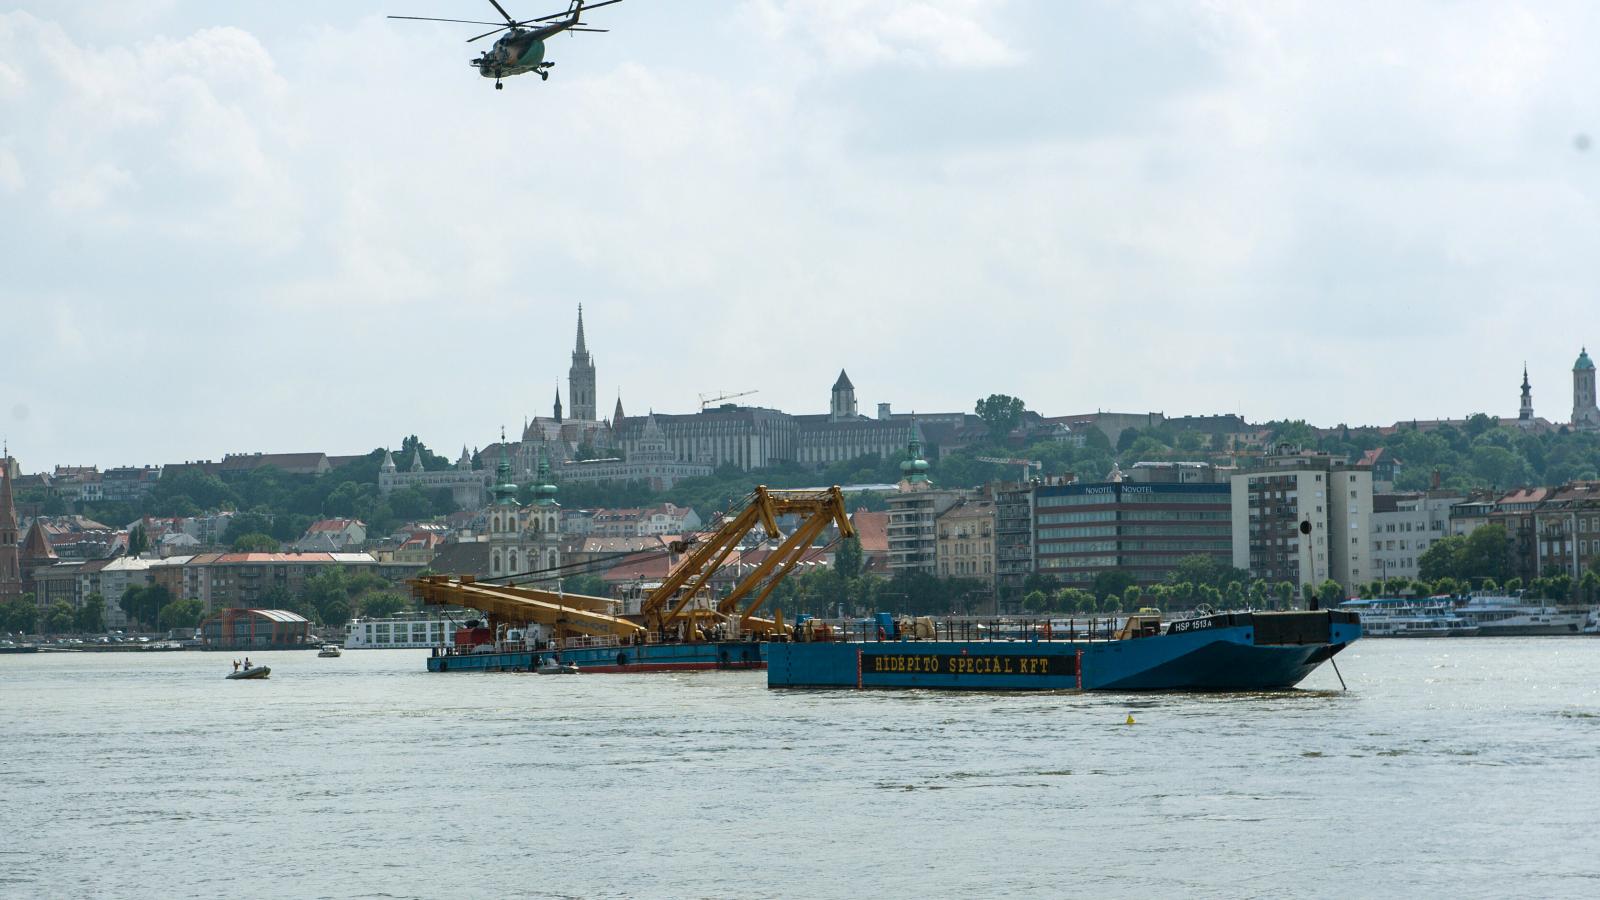 hajóbaleset hableány kiemelése magyarul